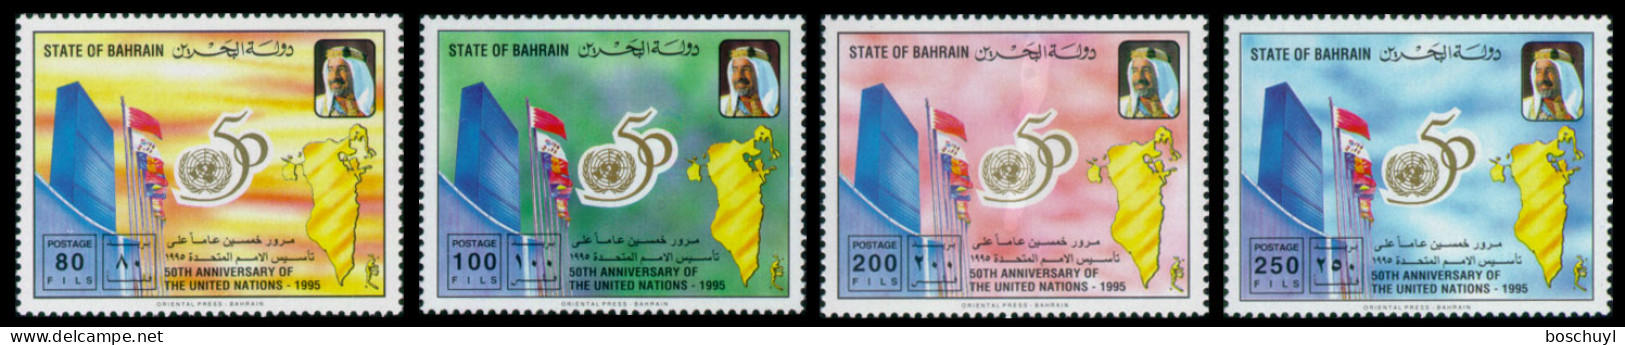 Bahrain, 1995, United Nations 50th Anniversary, MNH, Michel 580-583 - Bahrein (1965-...)